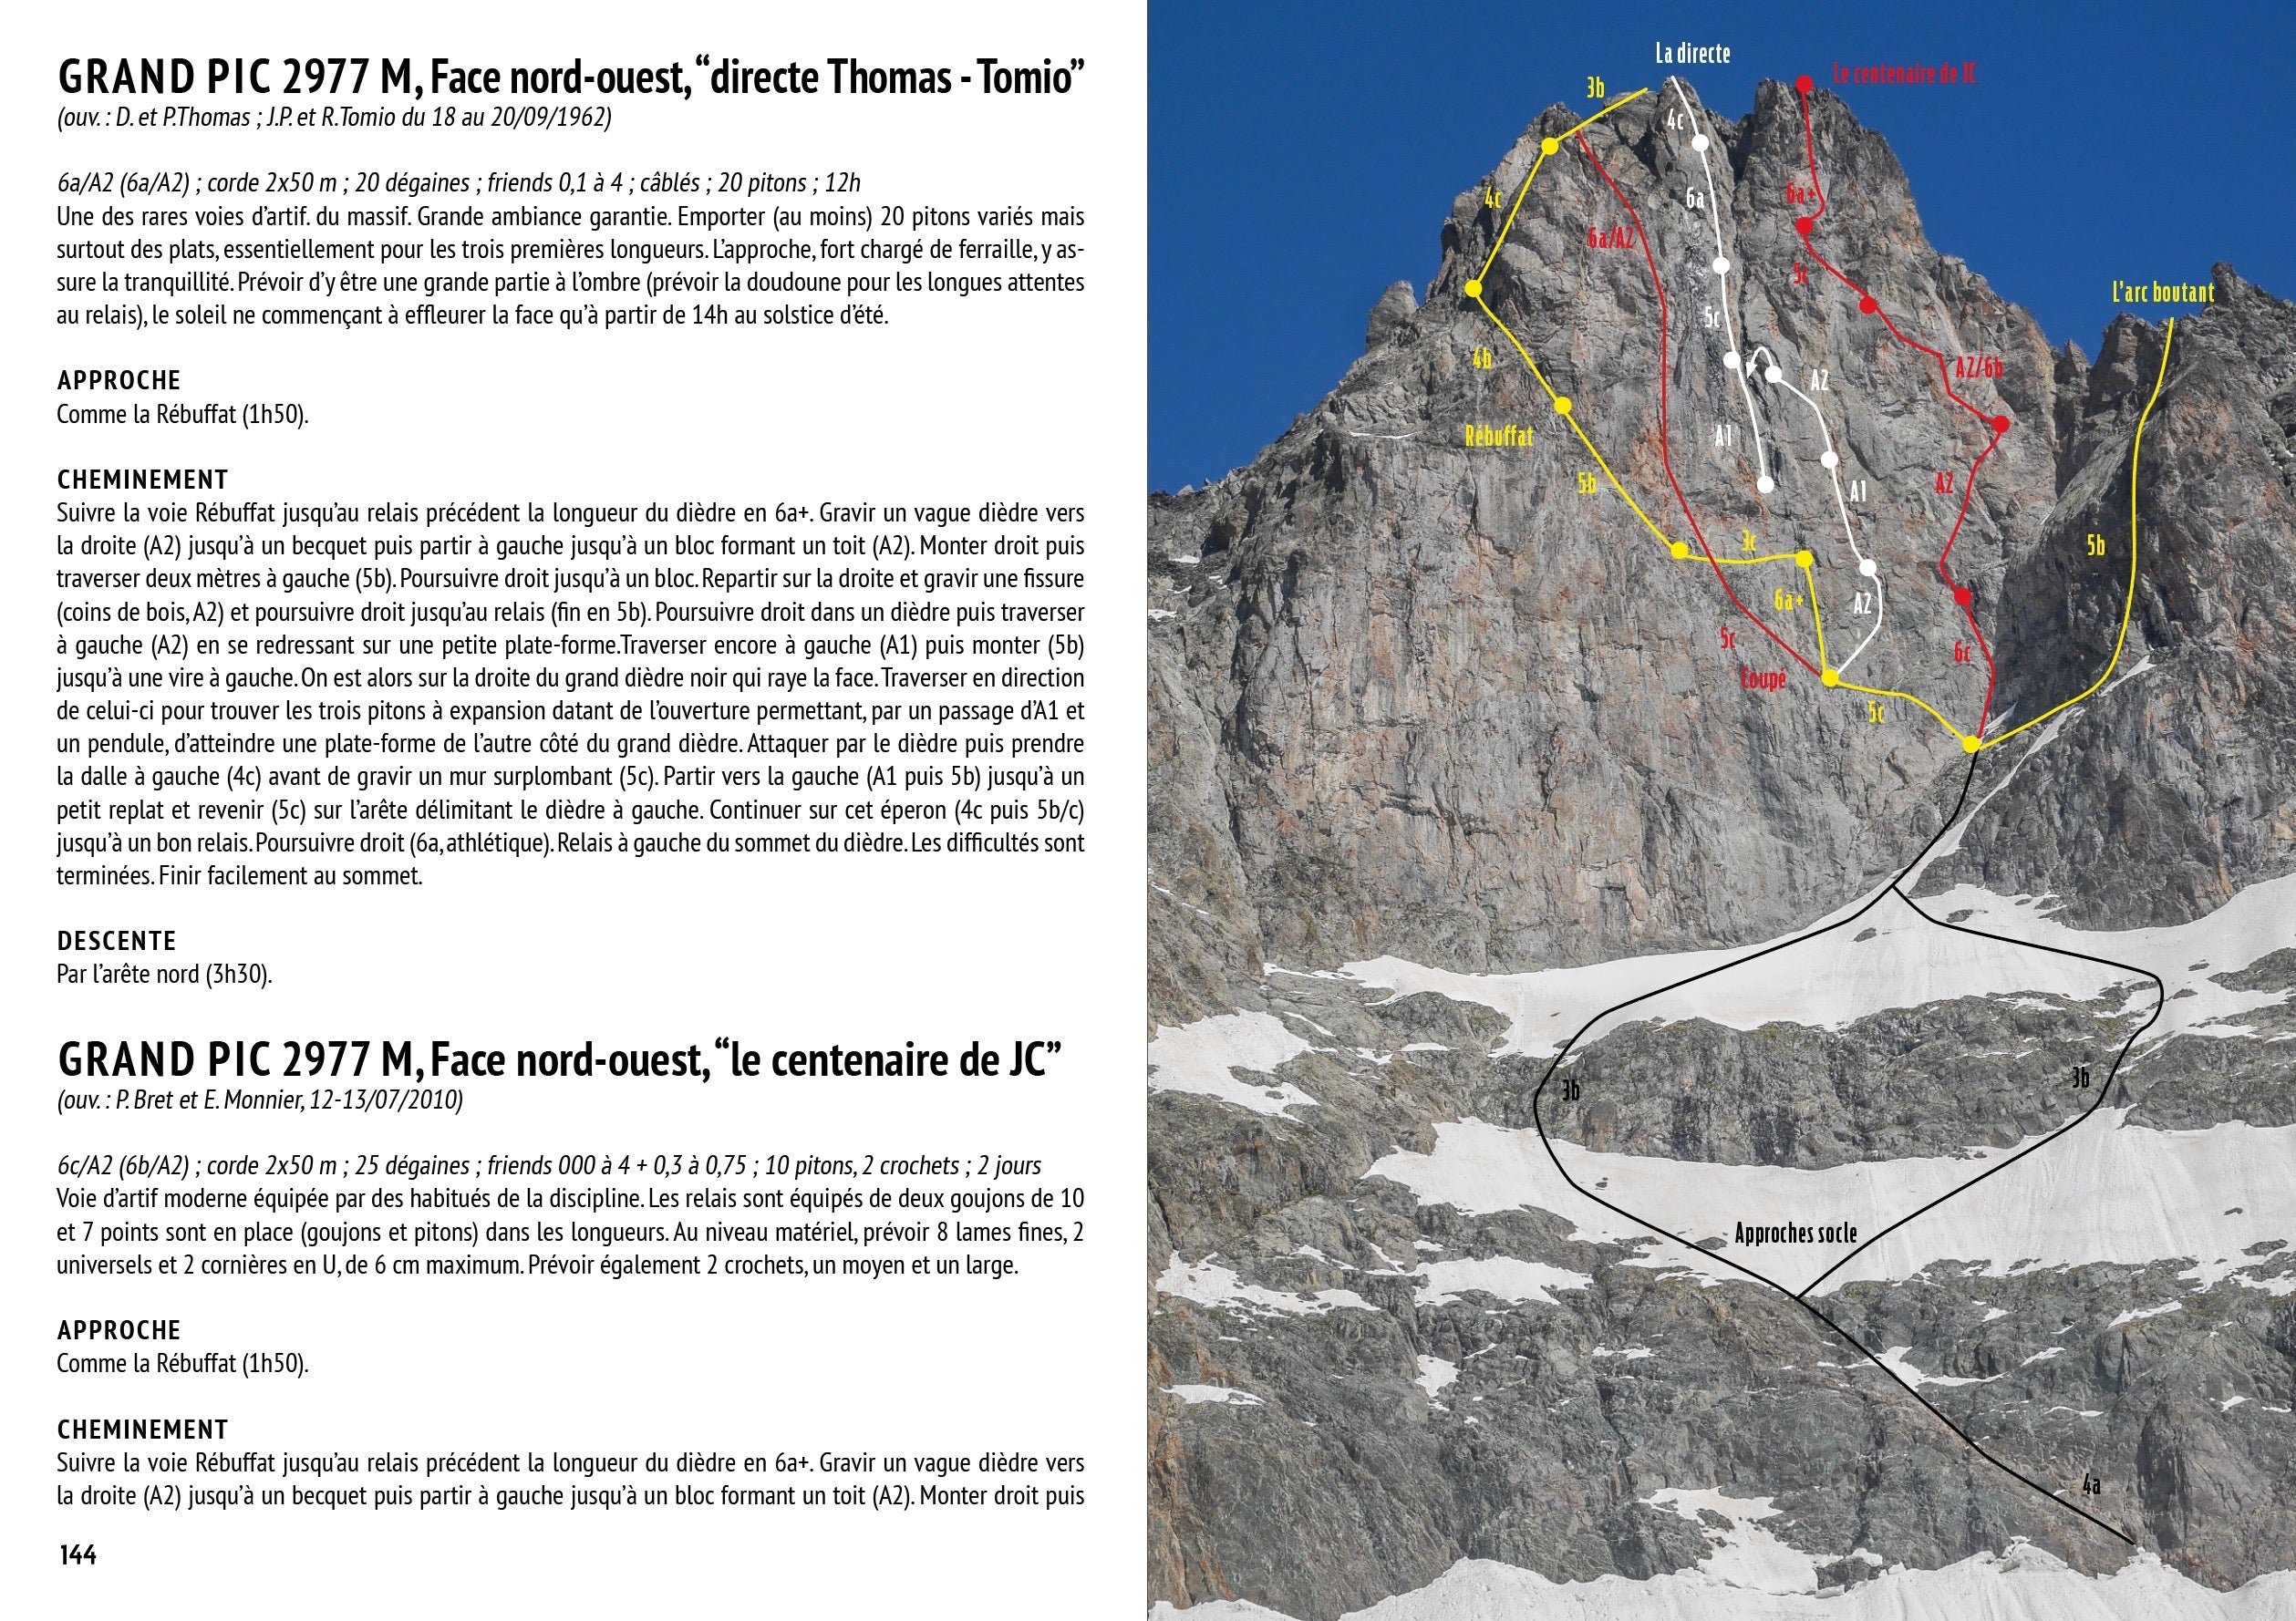 VTOPO ROC Belledonne Climbing - 2nd edition